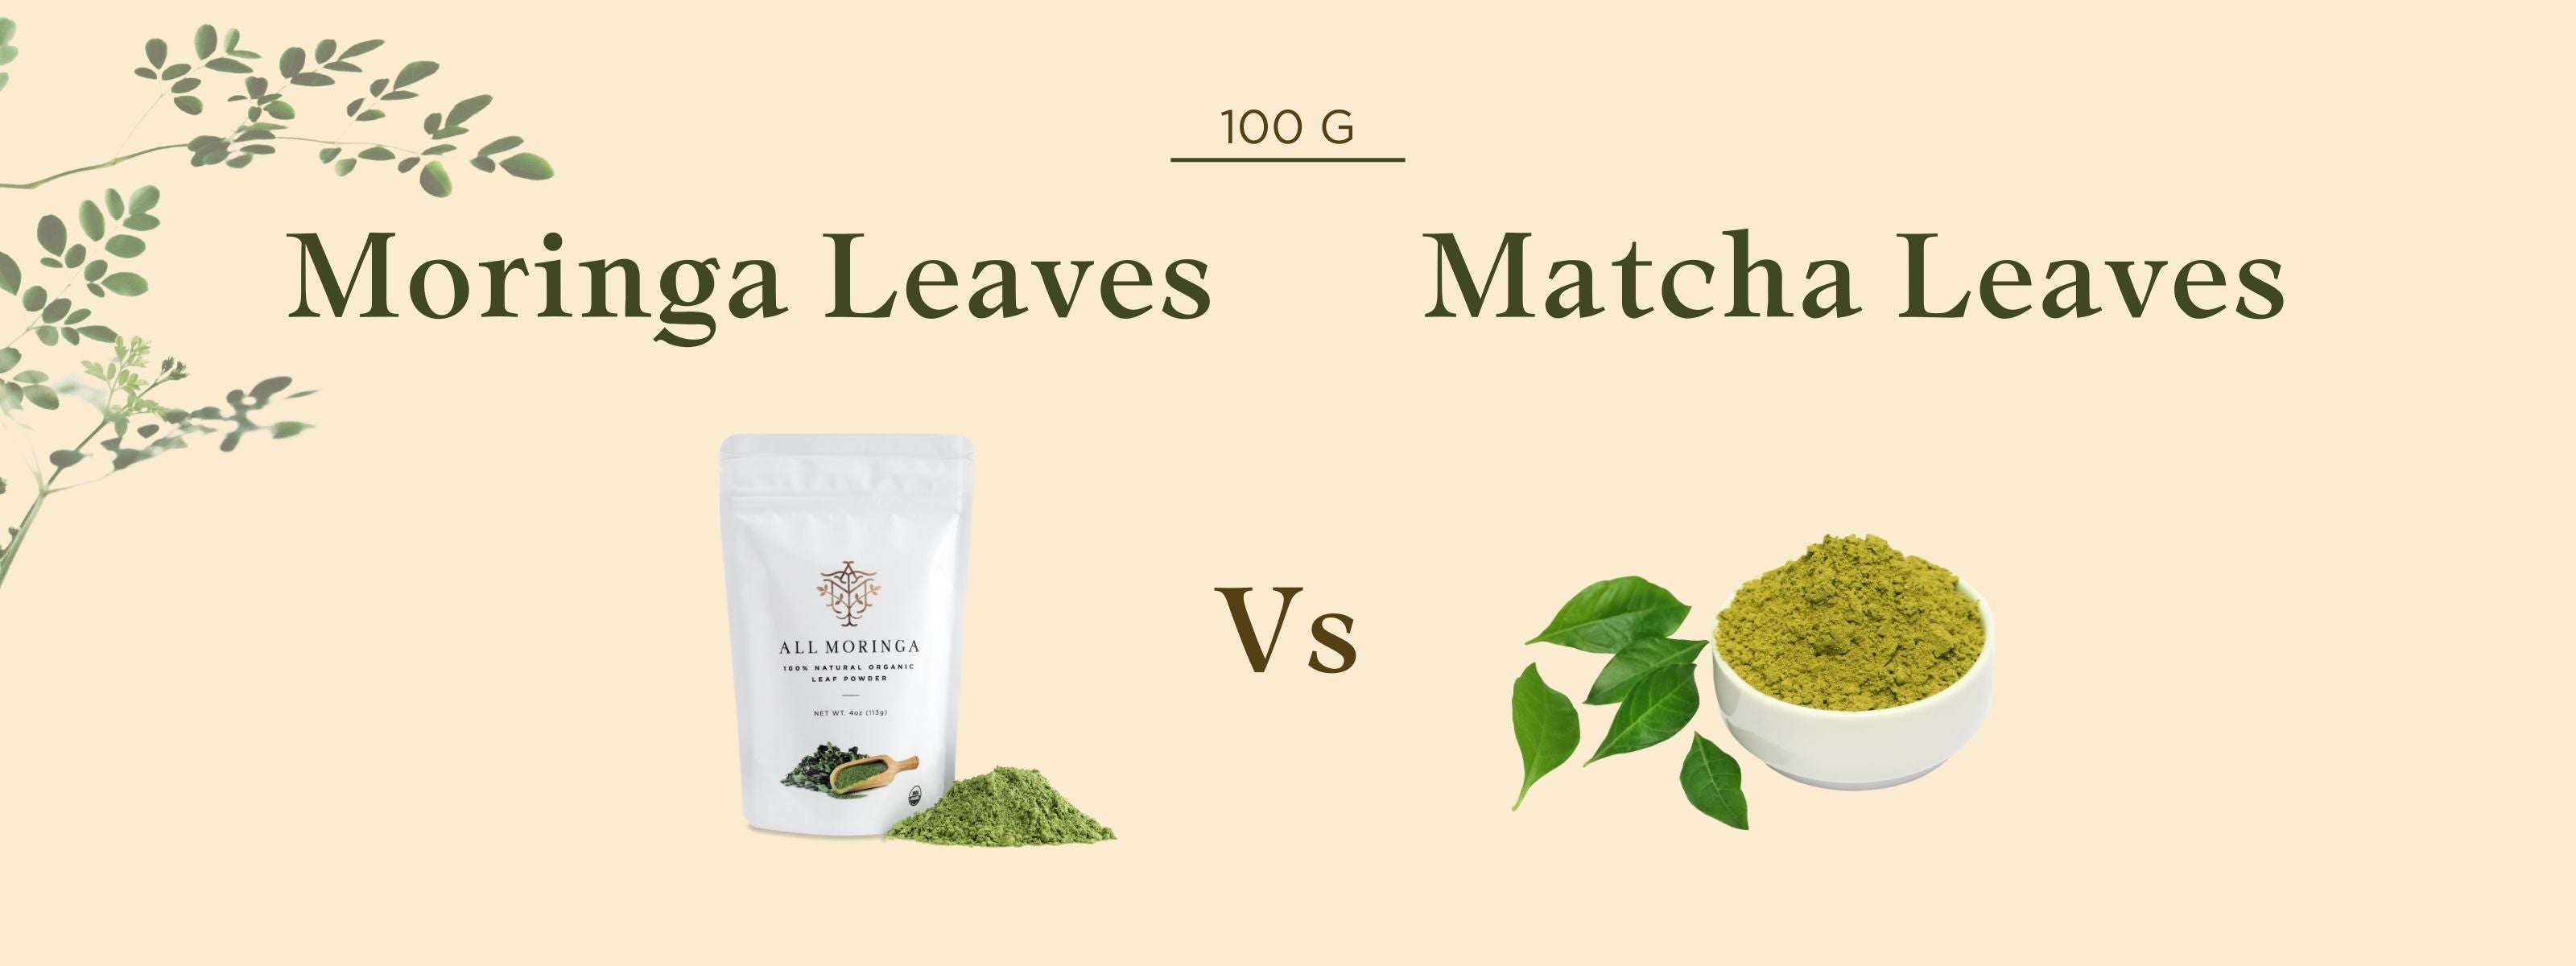 Moringa Leaves and  Matcha Leaves compare